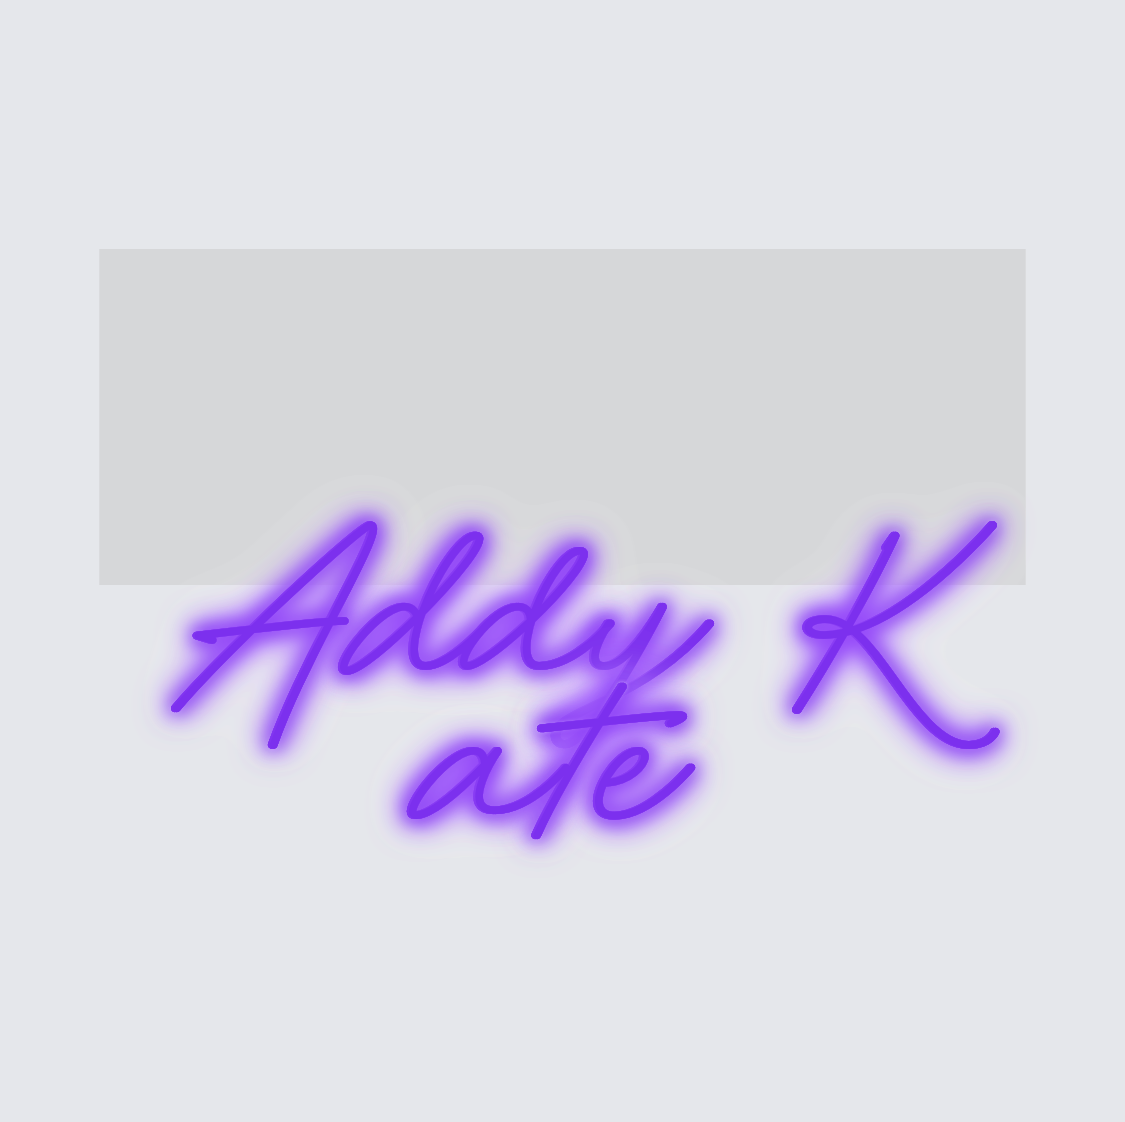 Custom neon sign - Addy Kate